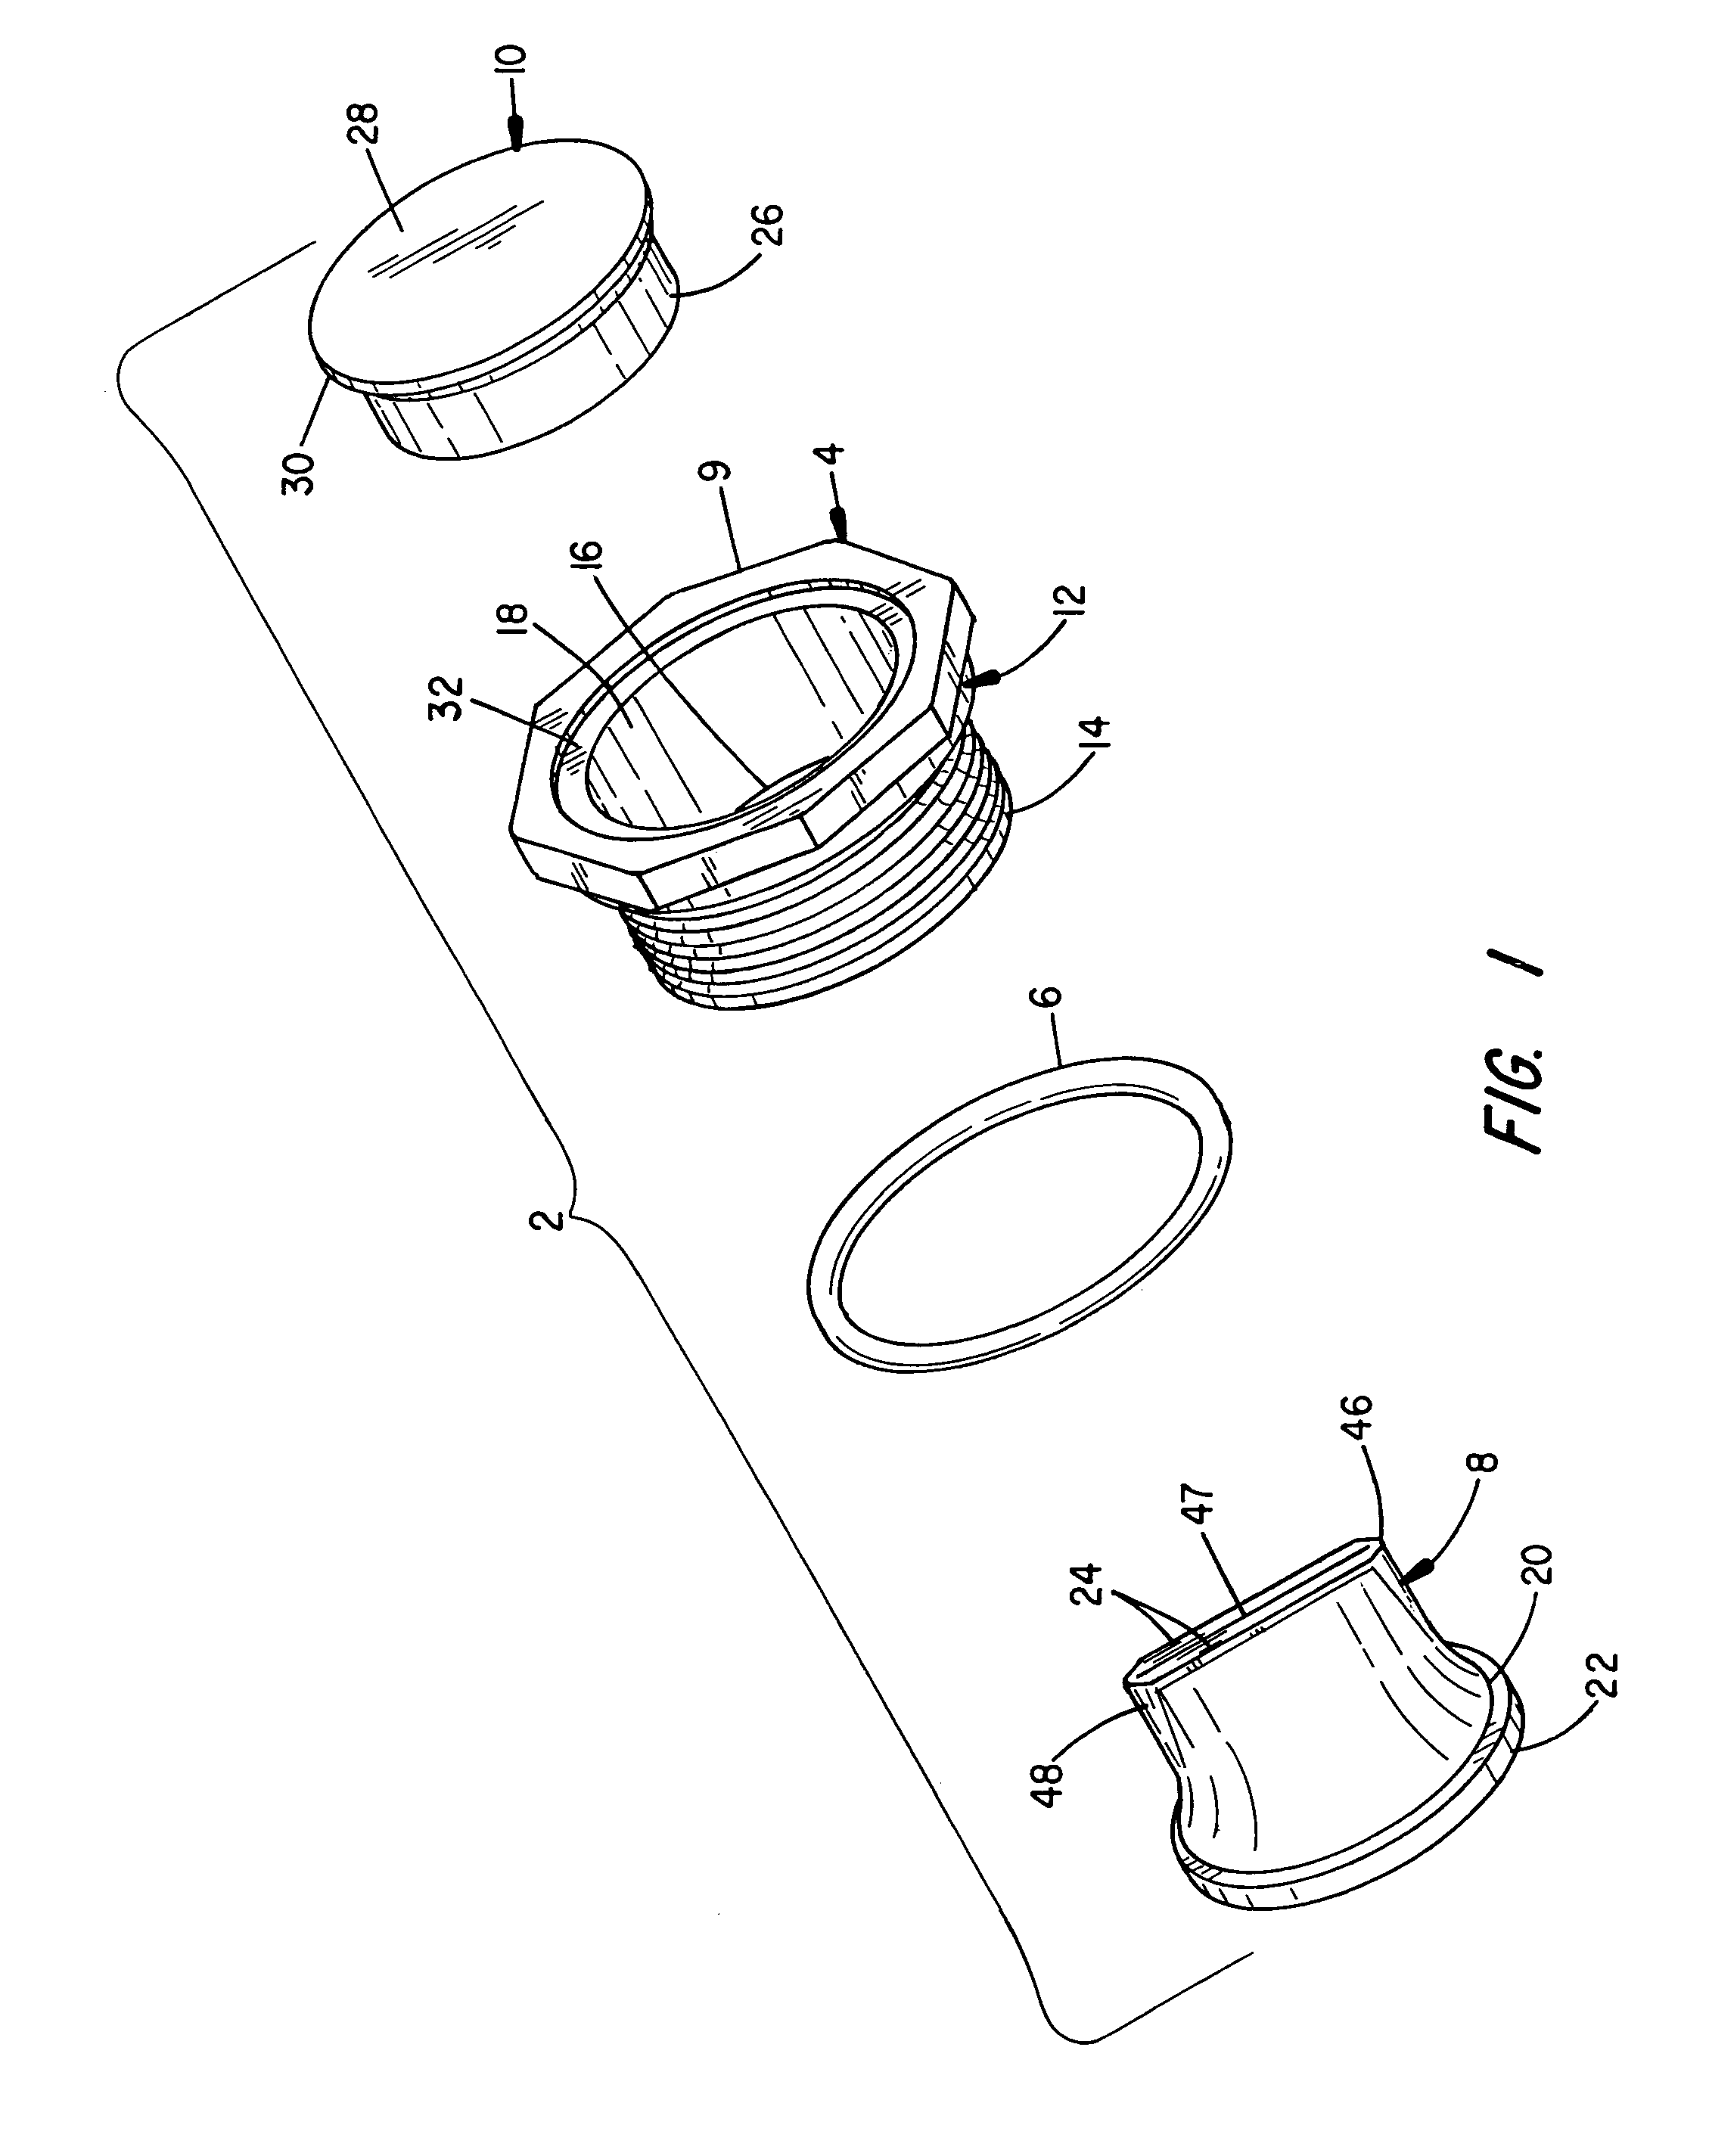 One-way elastomer valve